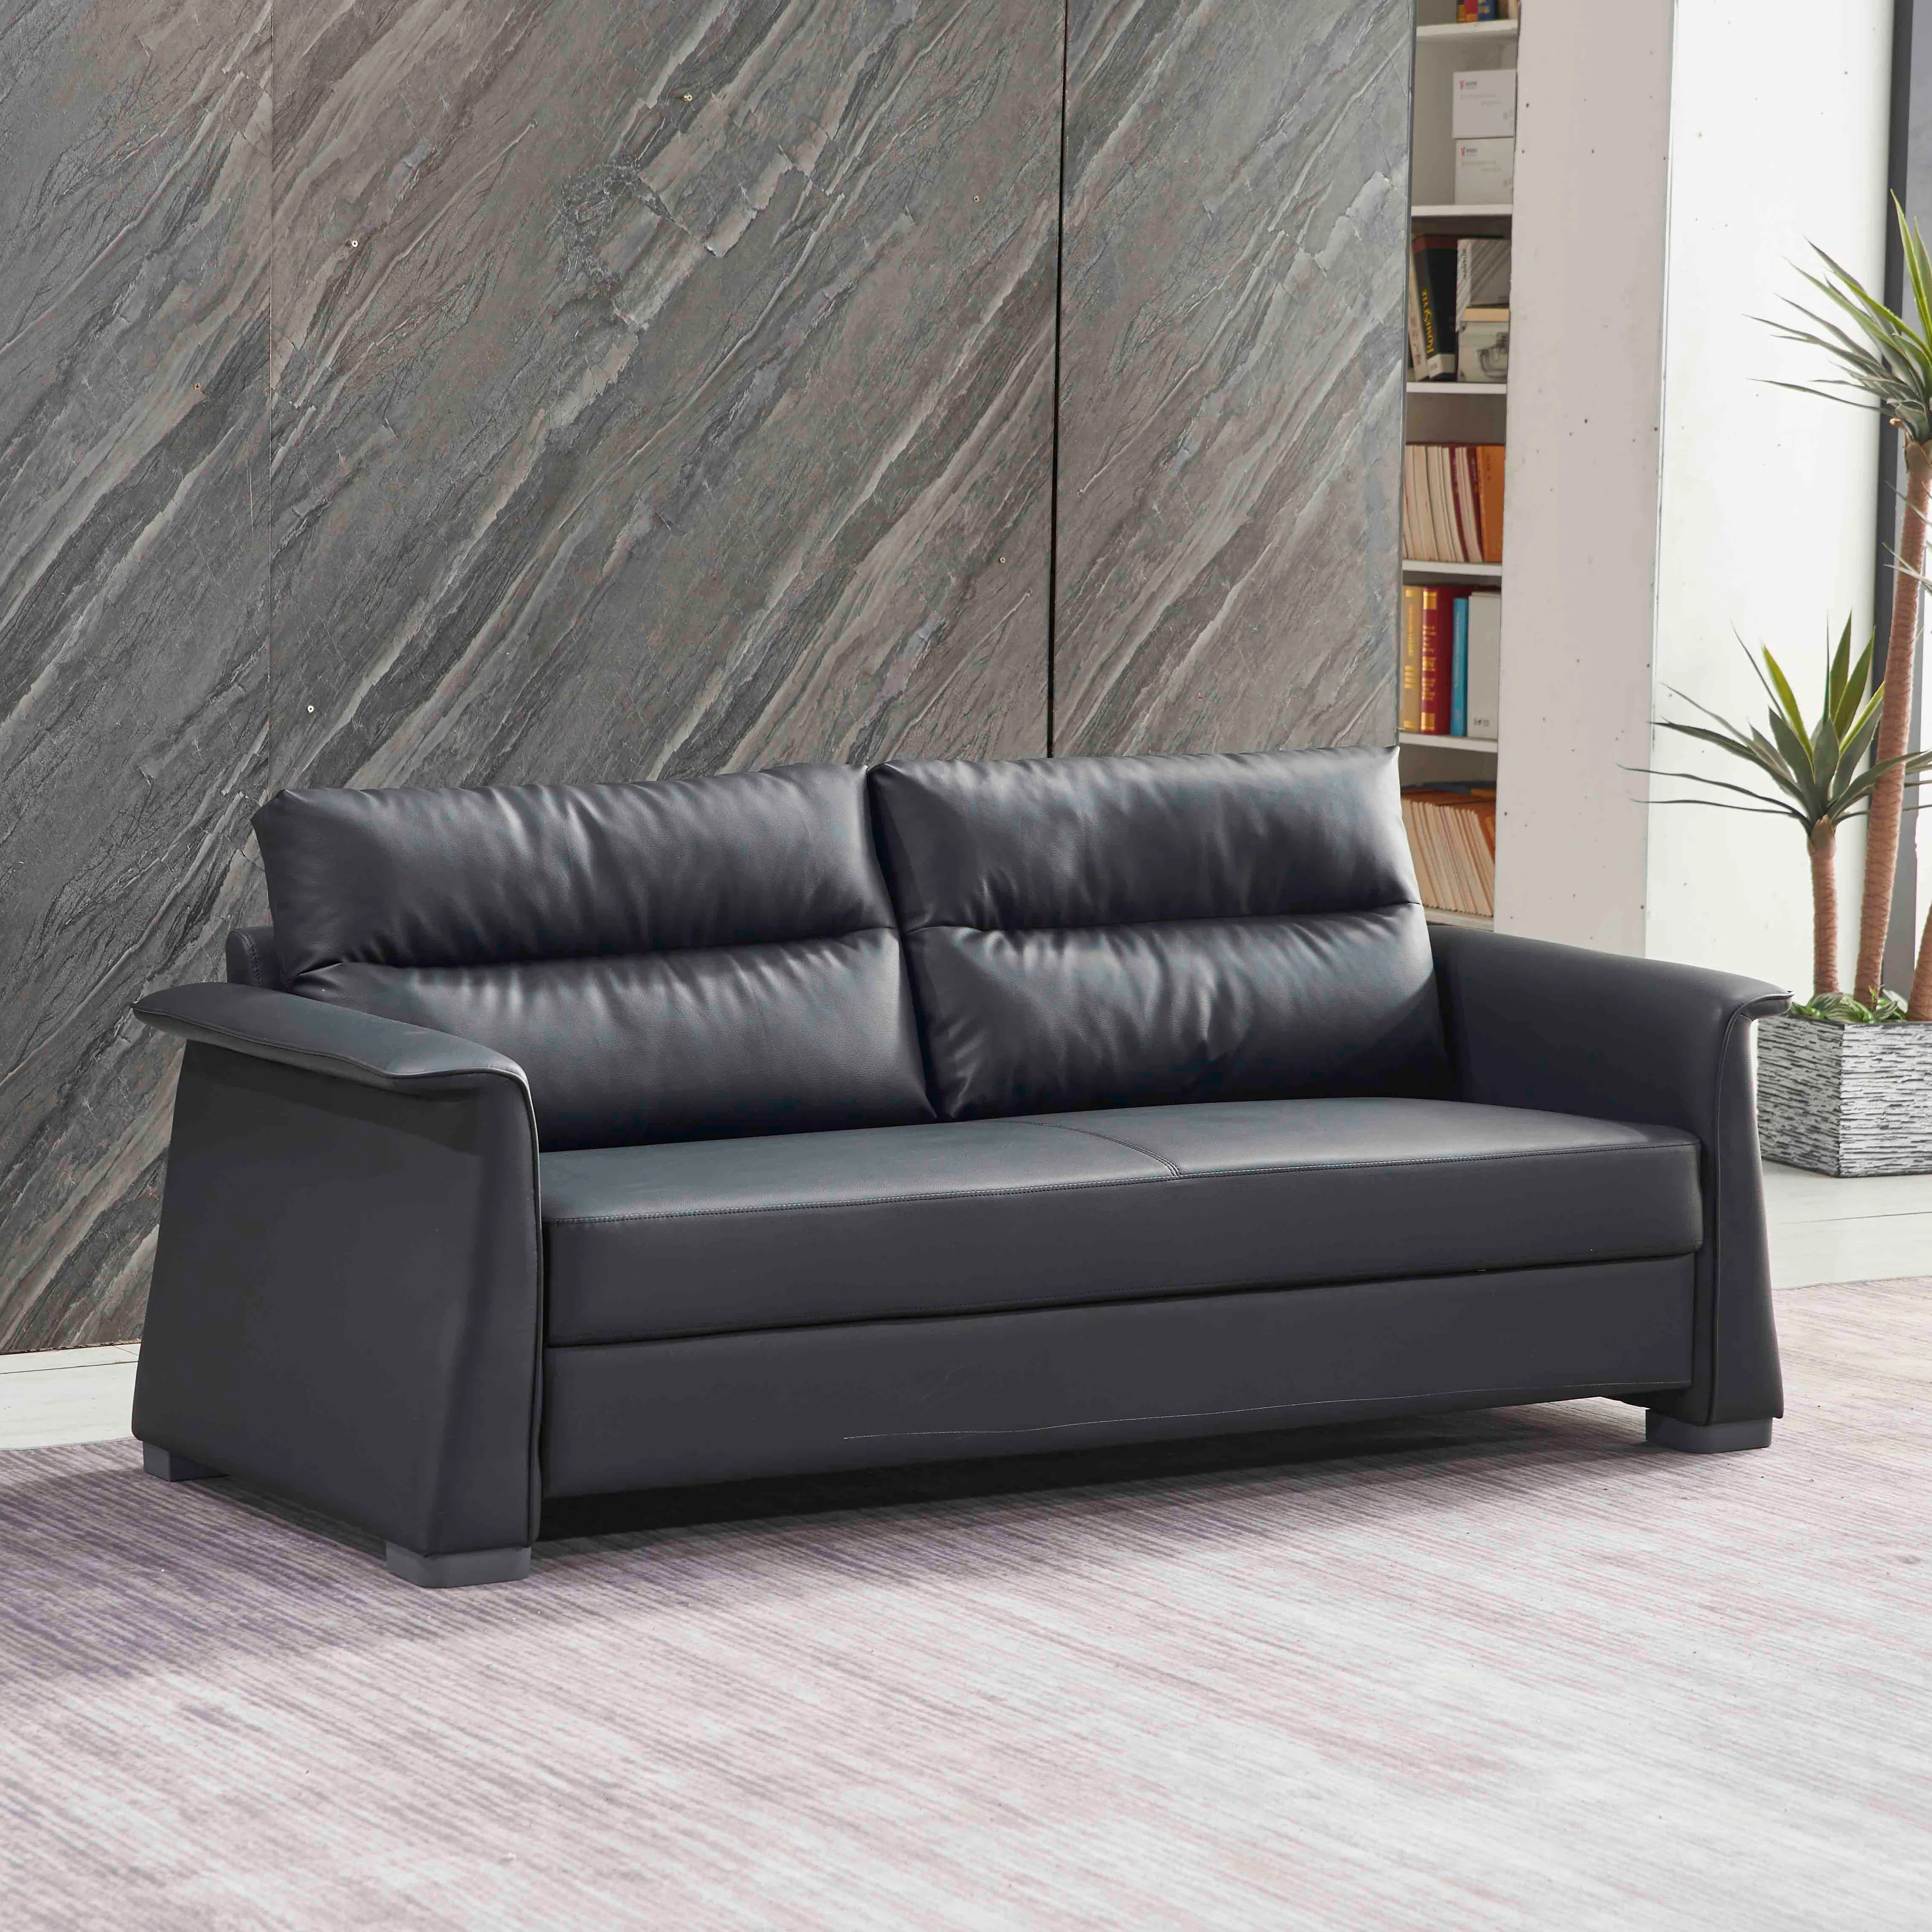 BOKE 9242 Meeting business reception leather office sofa combination modern minimalist